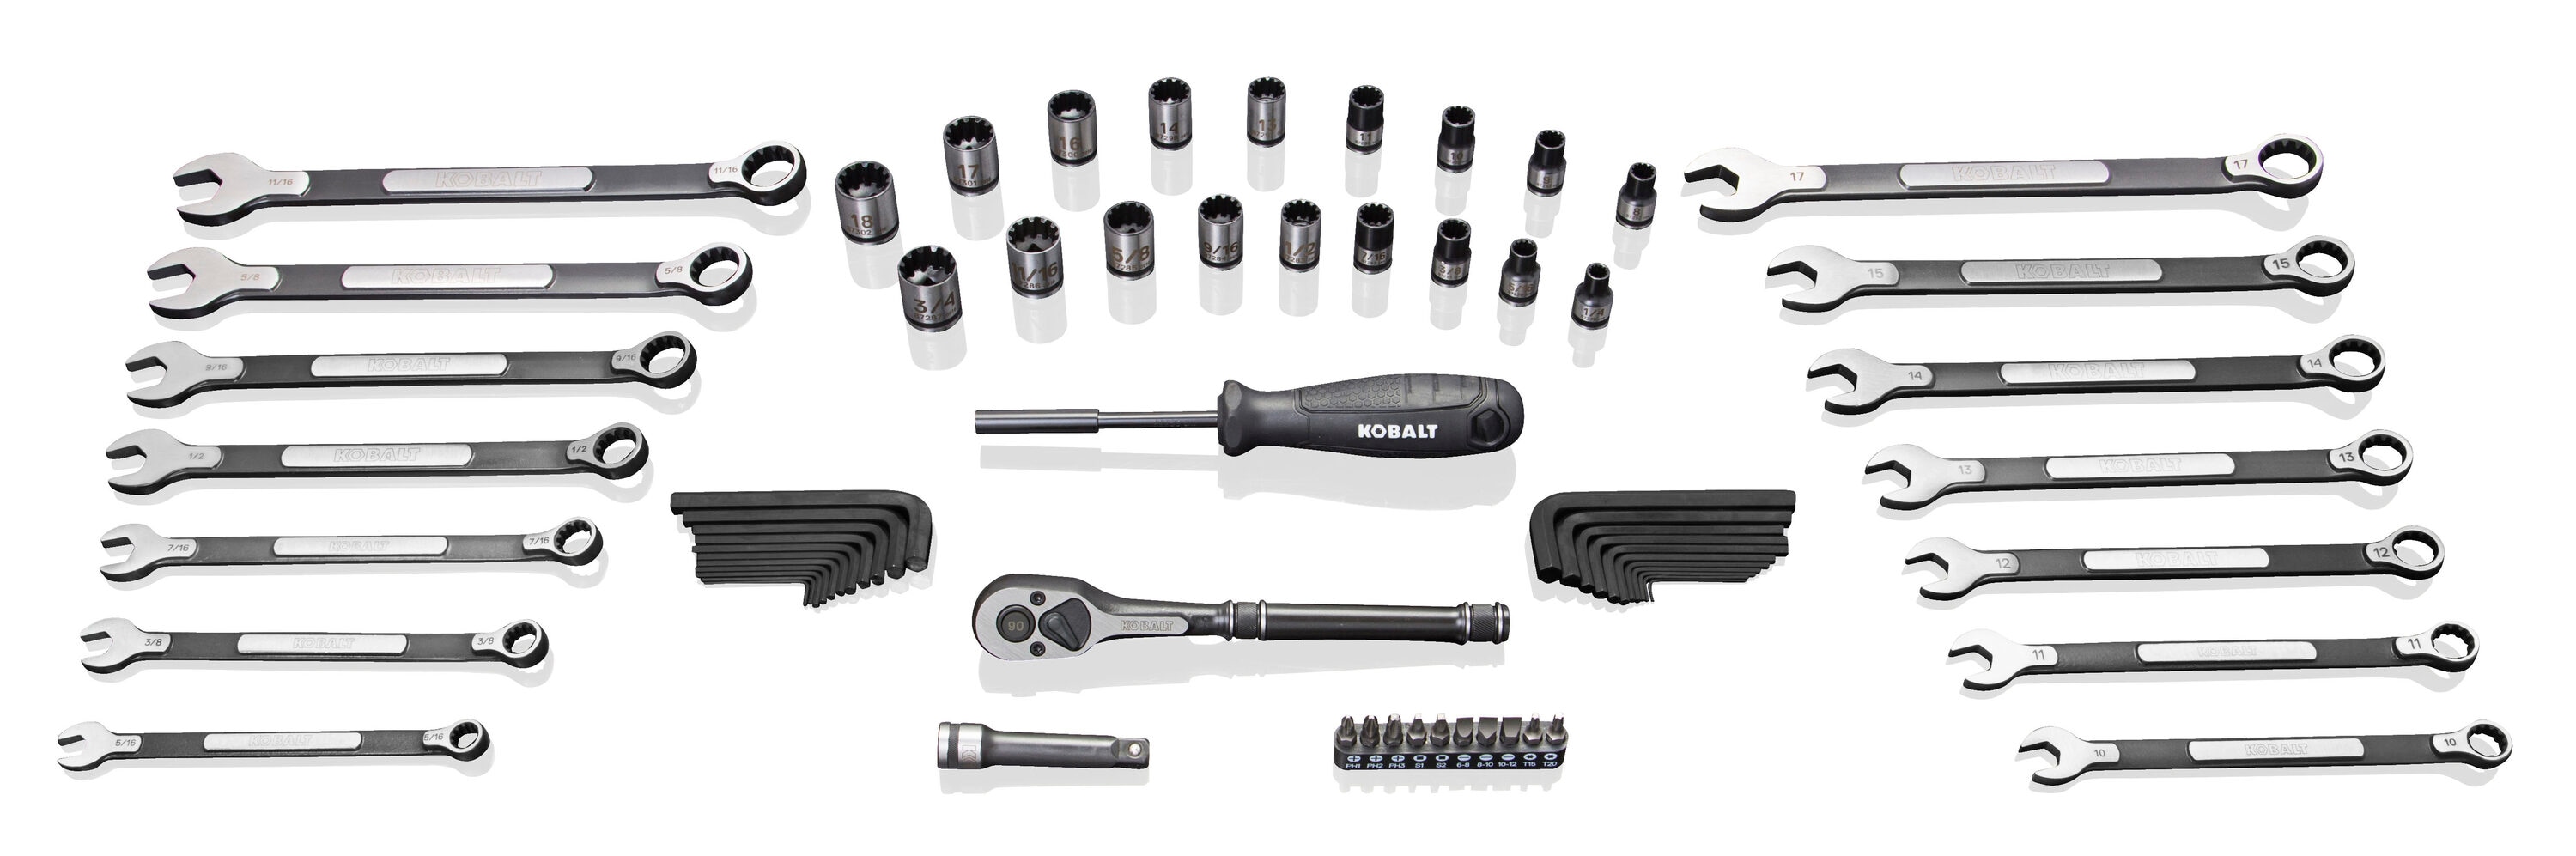 Universal 67-Piece Standard (SAE) and Metric Combination Matte Mechanics Tool Set with Hard Case | - Kobalt 80732